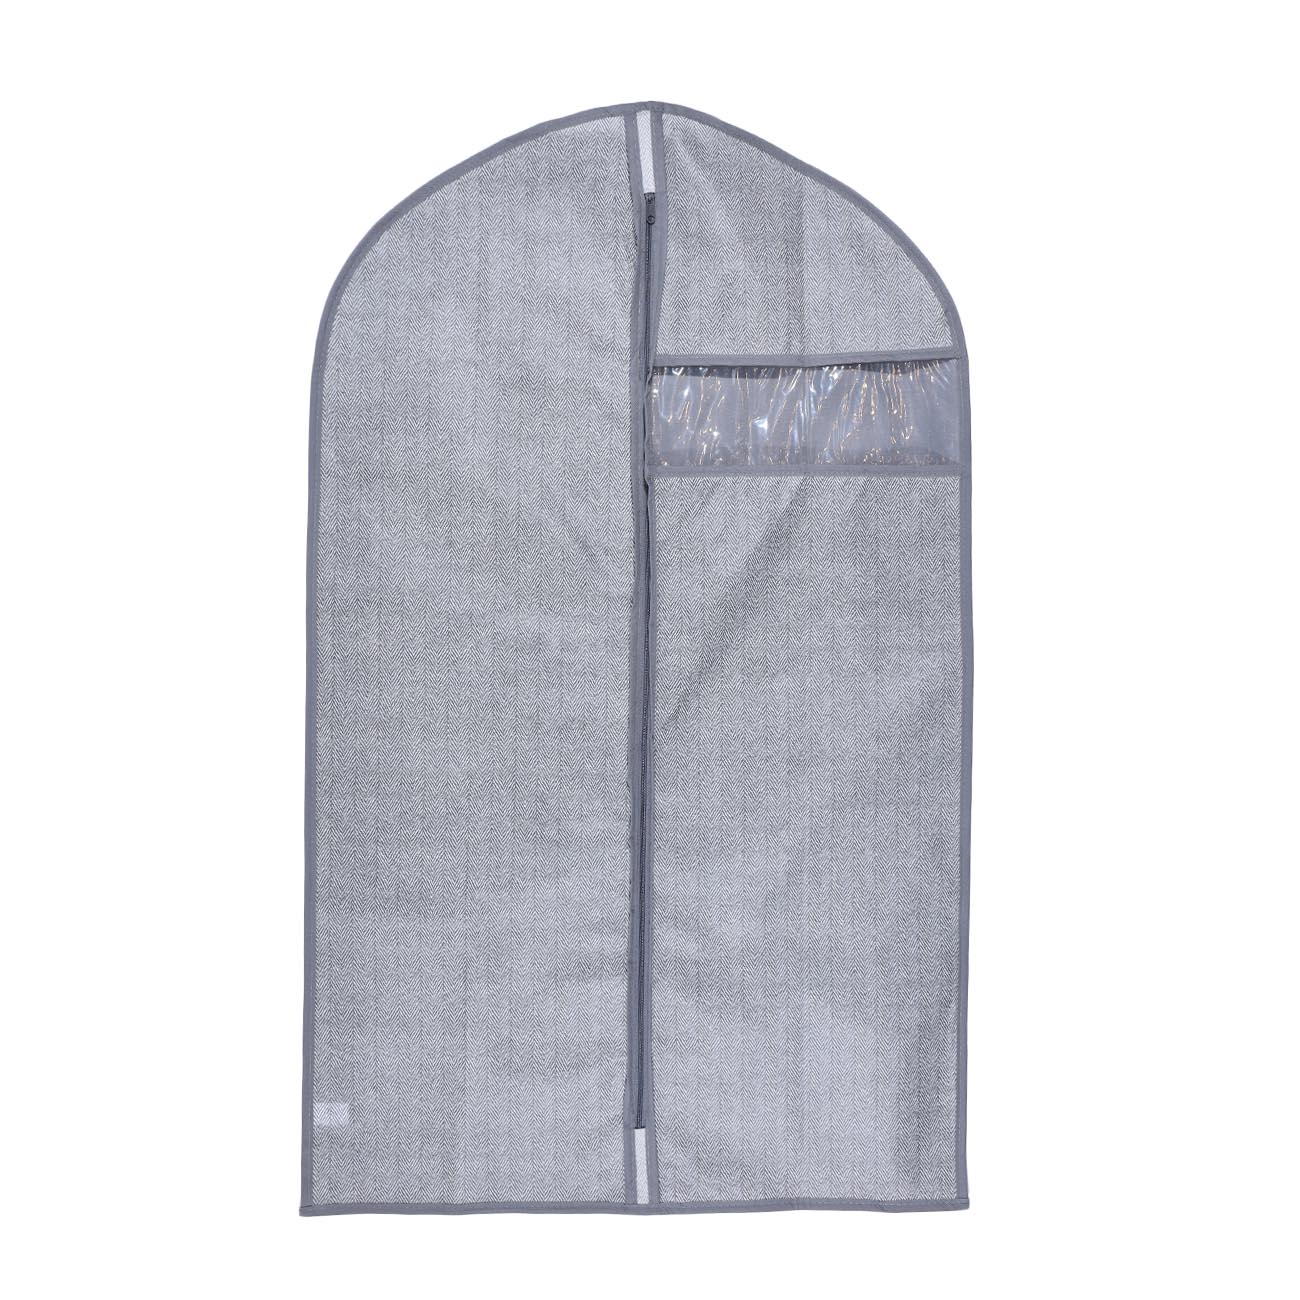 Чехол для одежды, 60х100 см, текстиль/ПВХ, серый, Pedant new